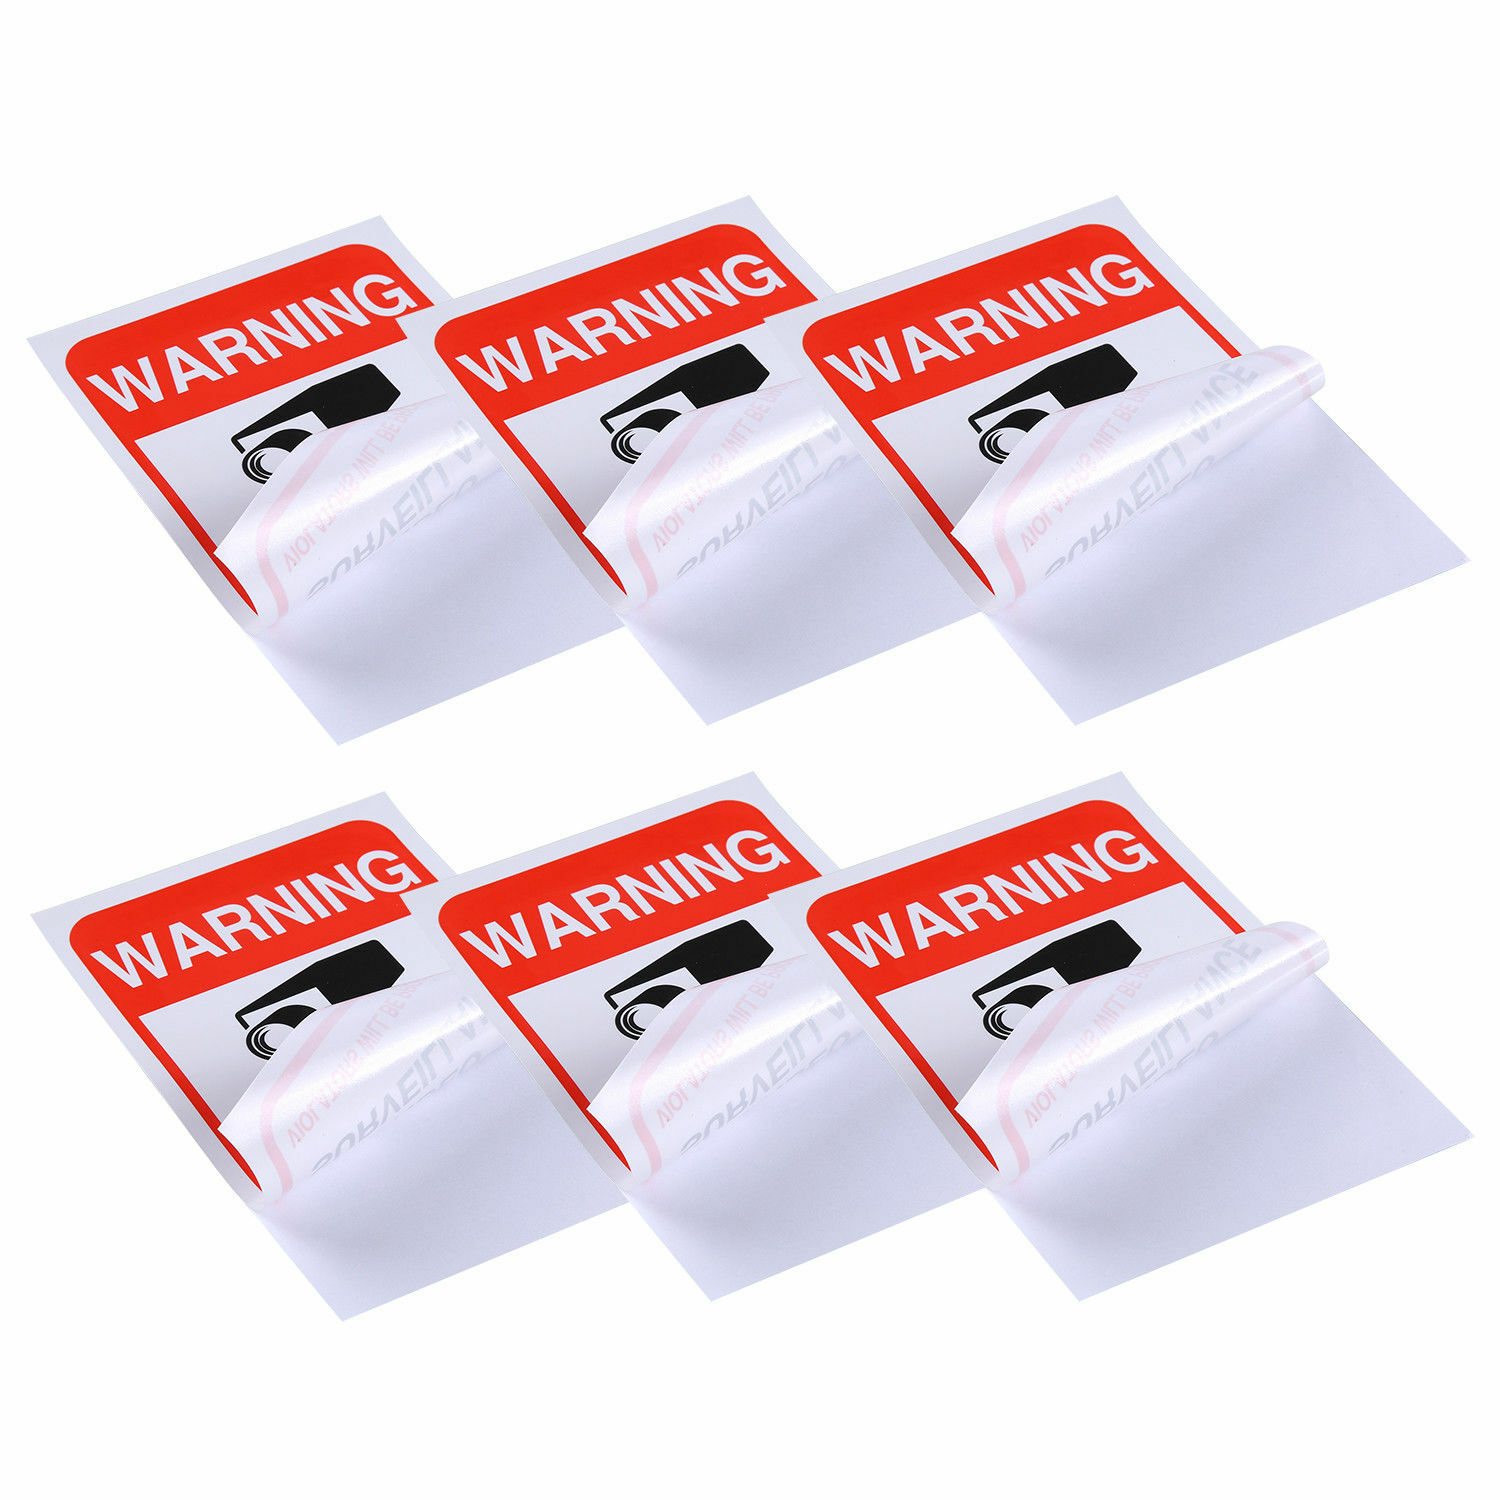 Sannce 6pcs 6.18*4.17 Pvc Cctv Sticker Warning Signs For Cctv Dvr Camera System